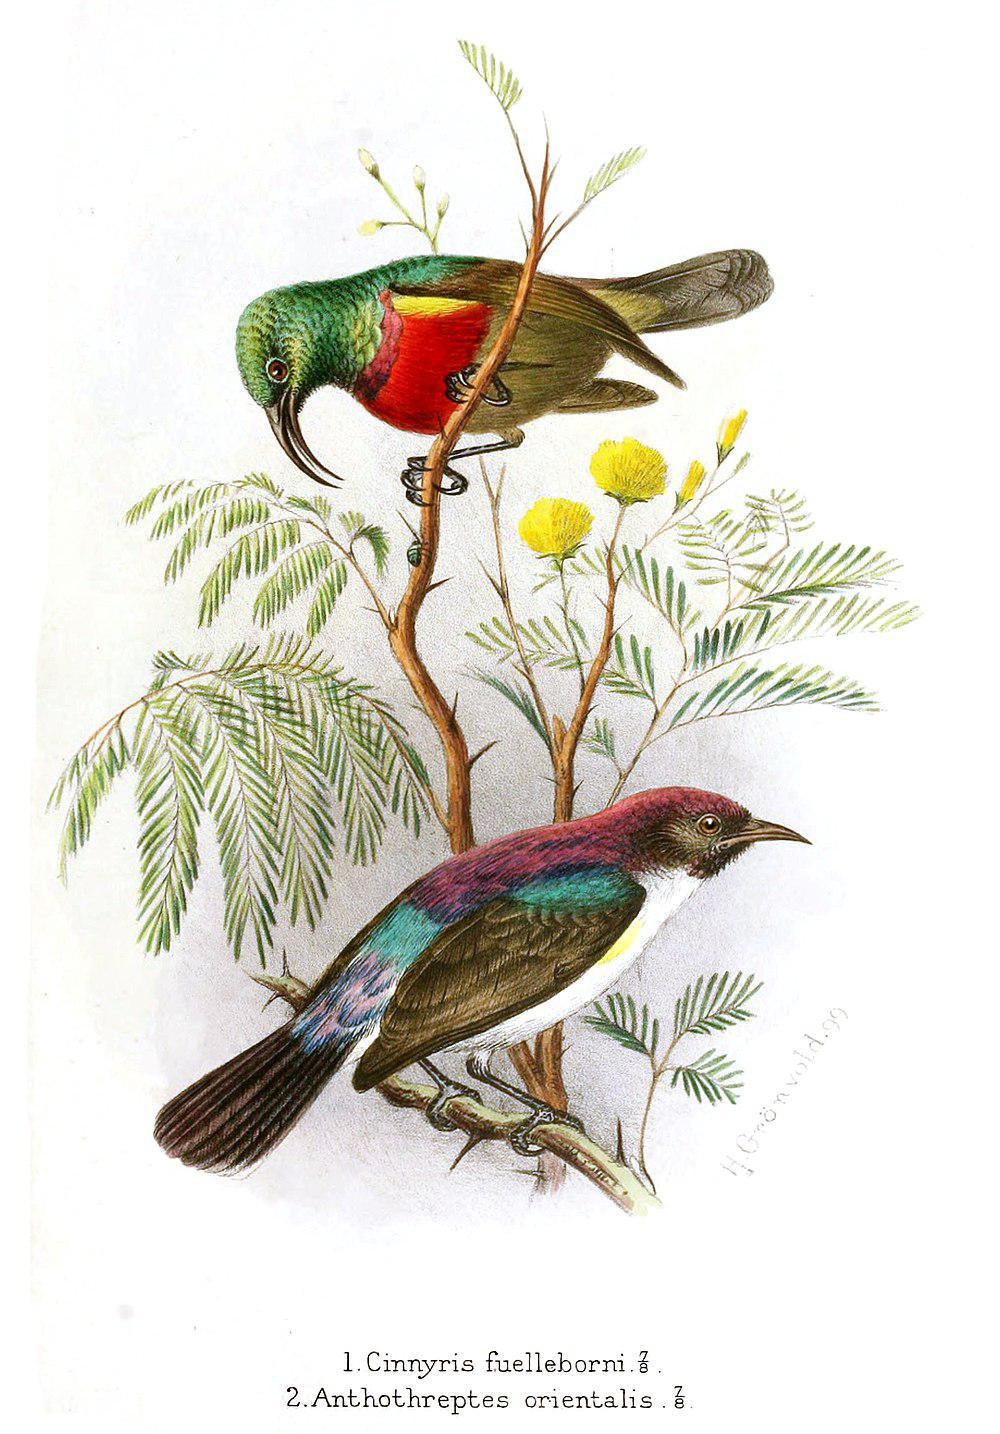 林双领花蜜鸟 / Forest Double-collared Sunbird / Cinnyris fuelleborni